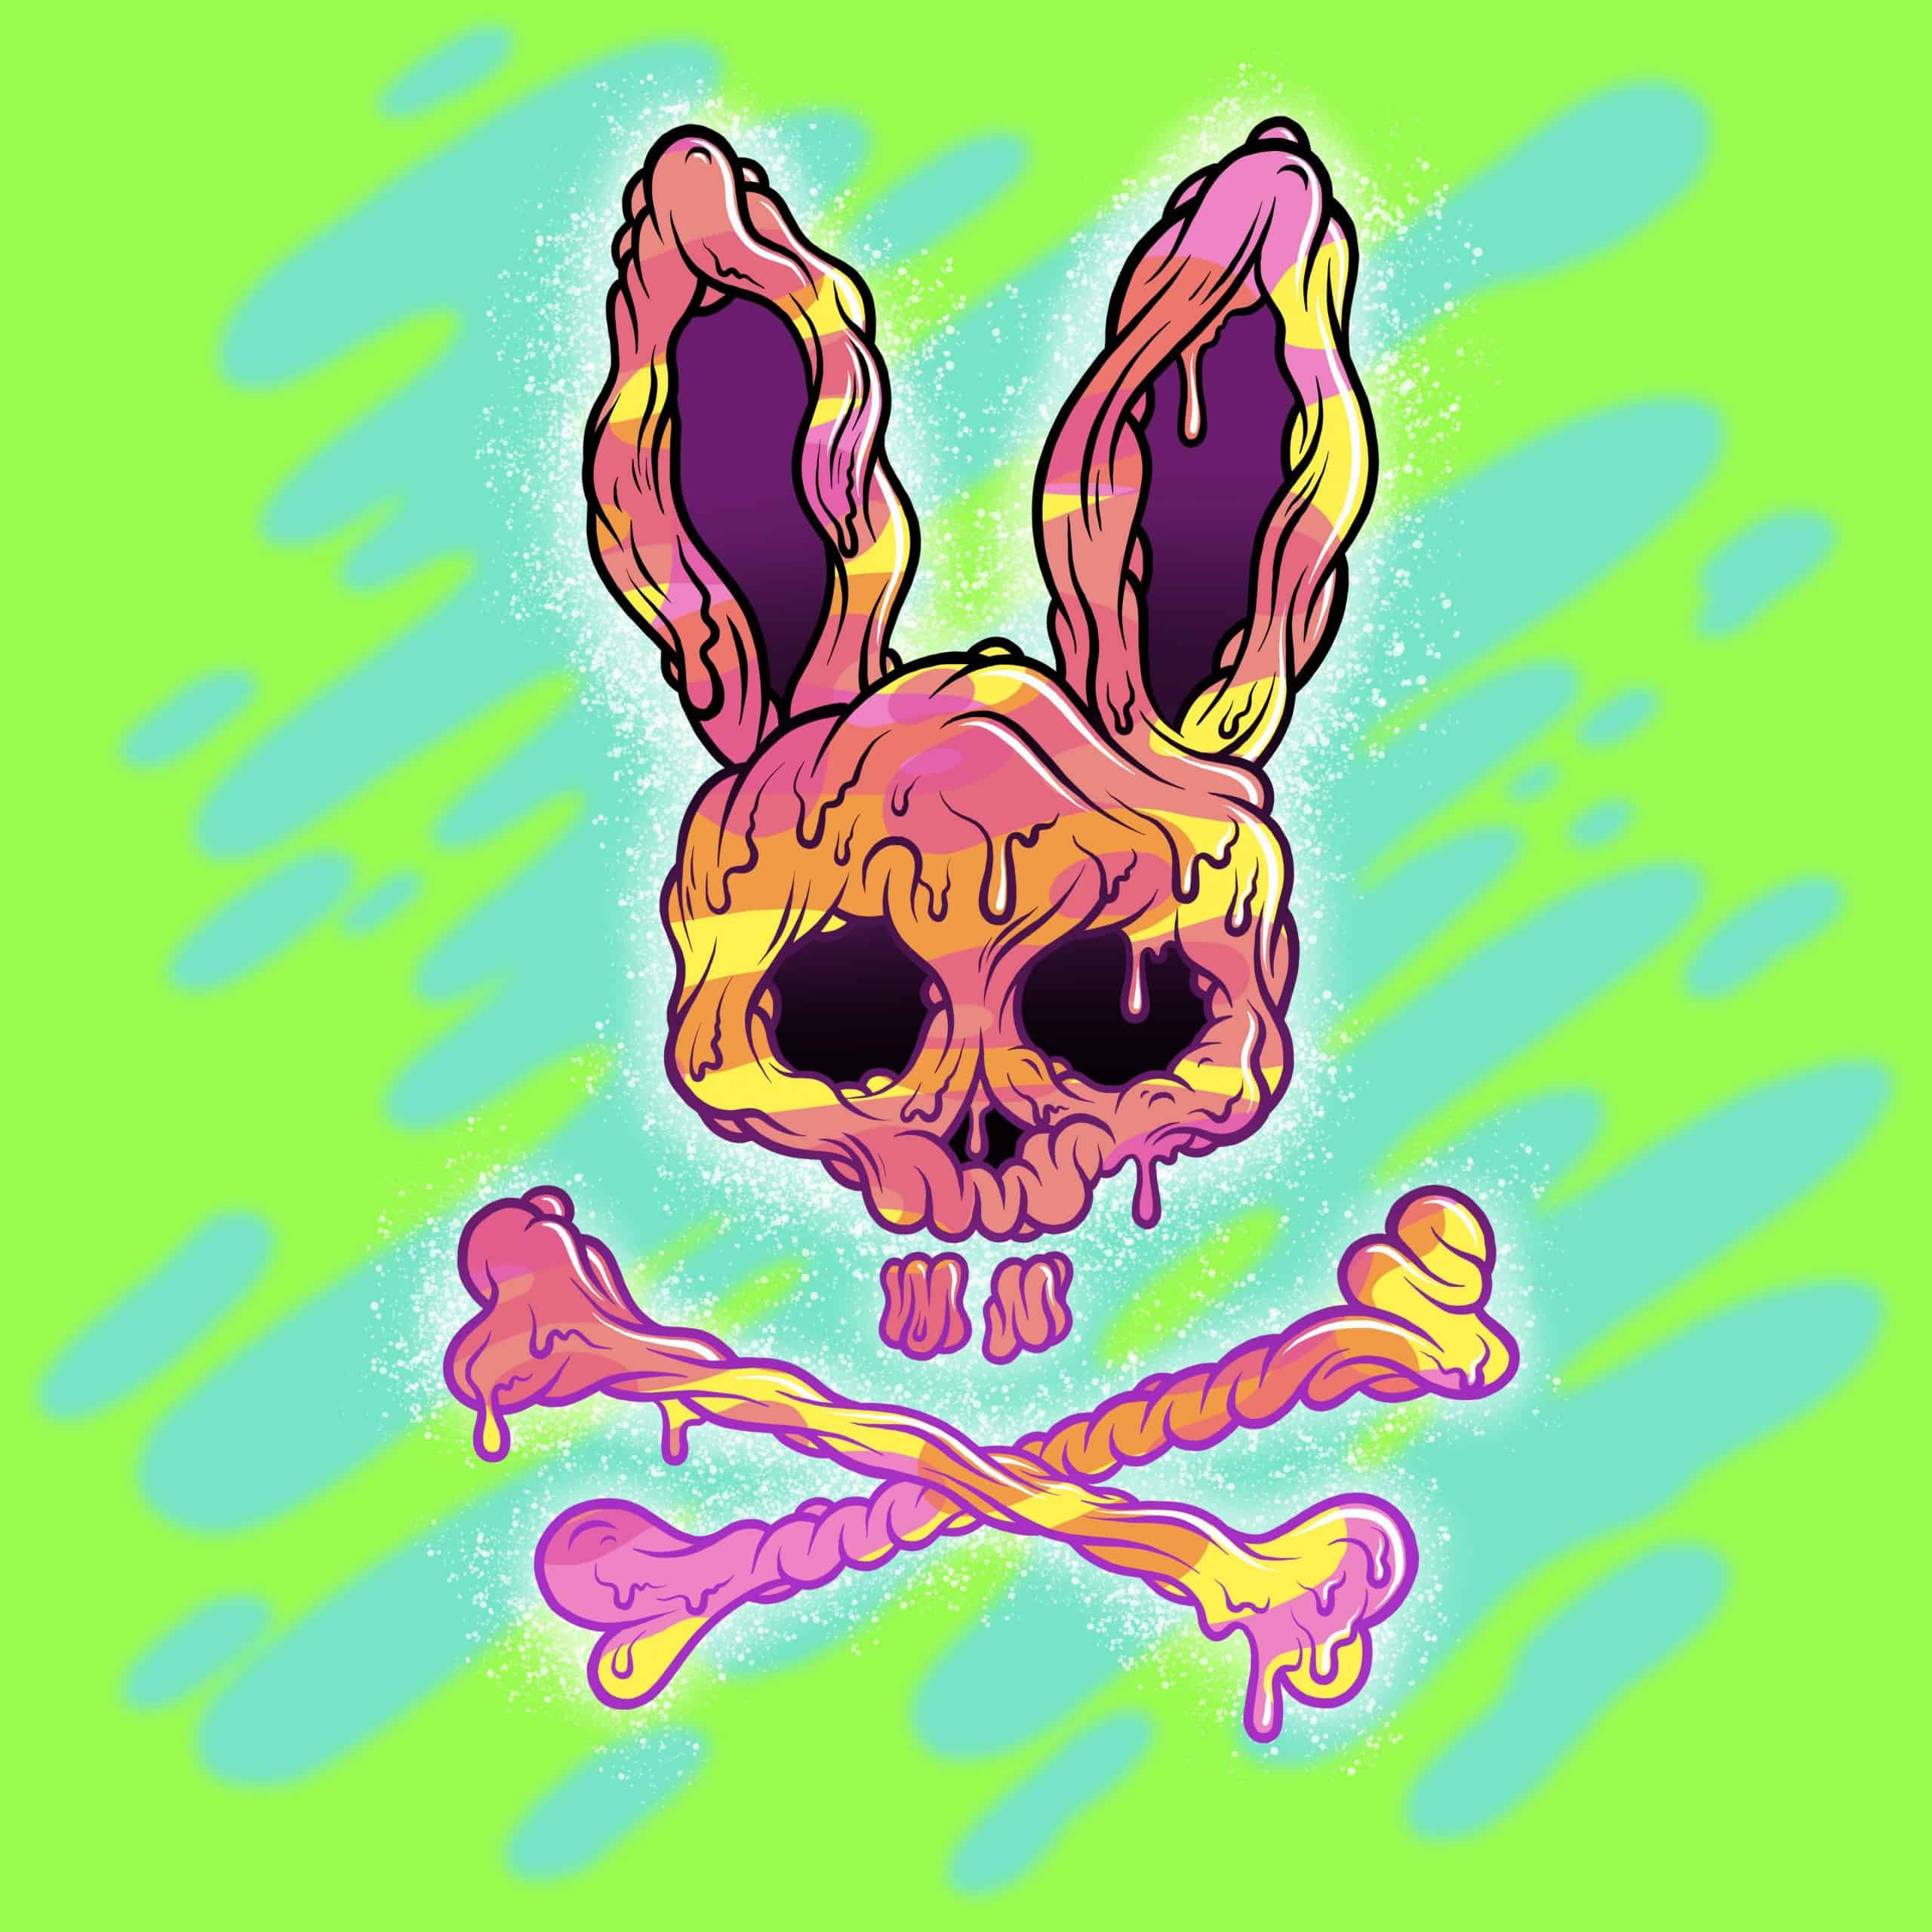 Psycho bunny nft